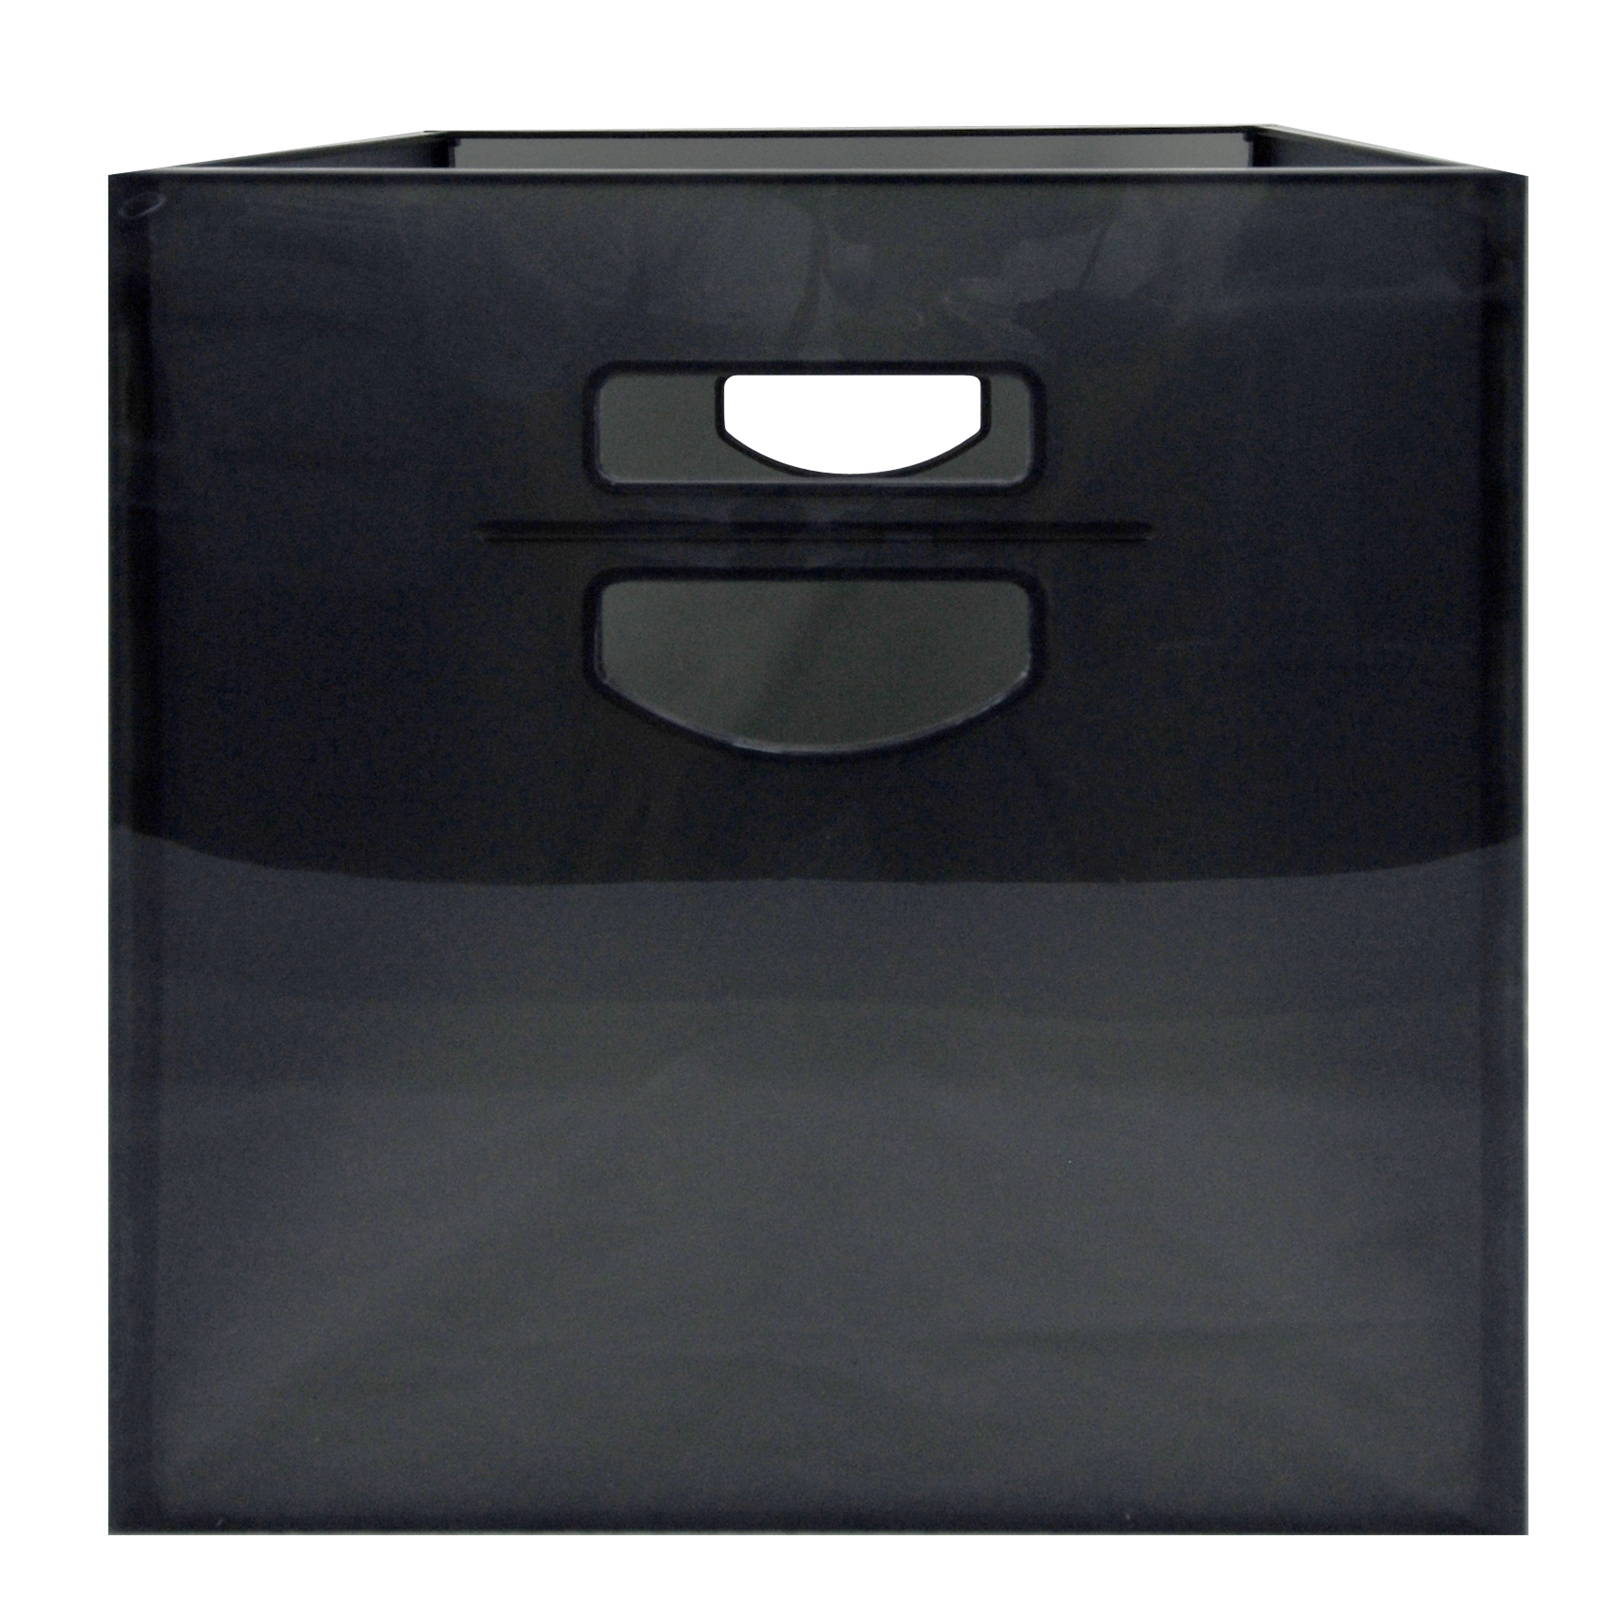 Clever Cube 330 x 330 x 370mm Black Plastic Insert